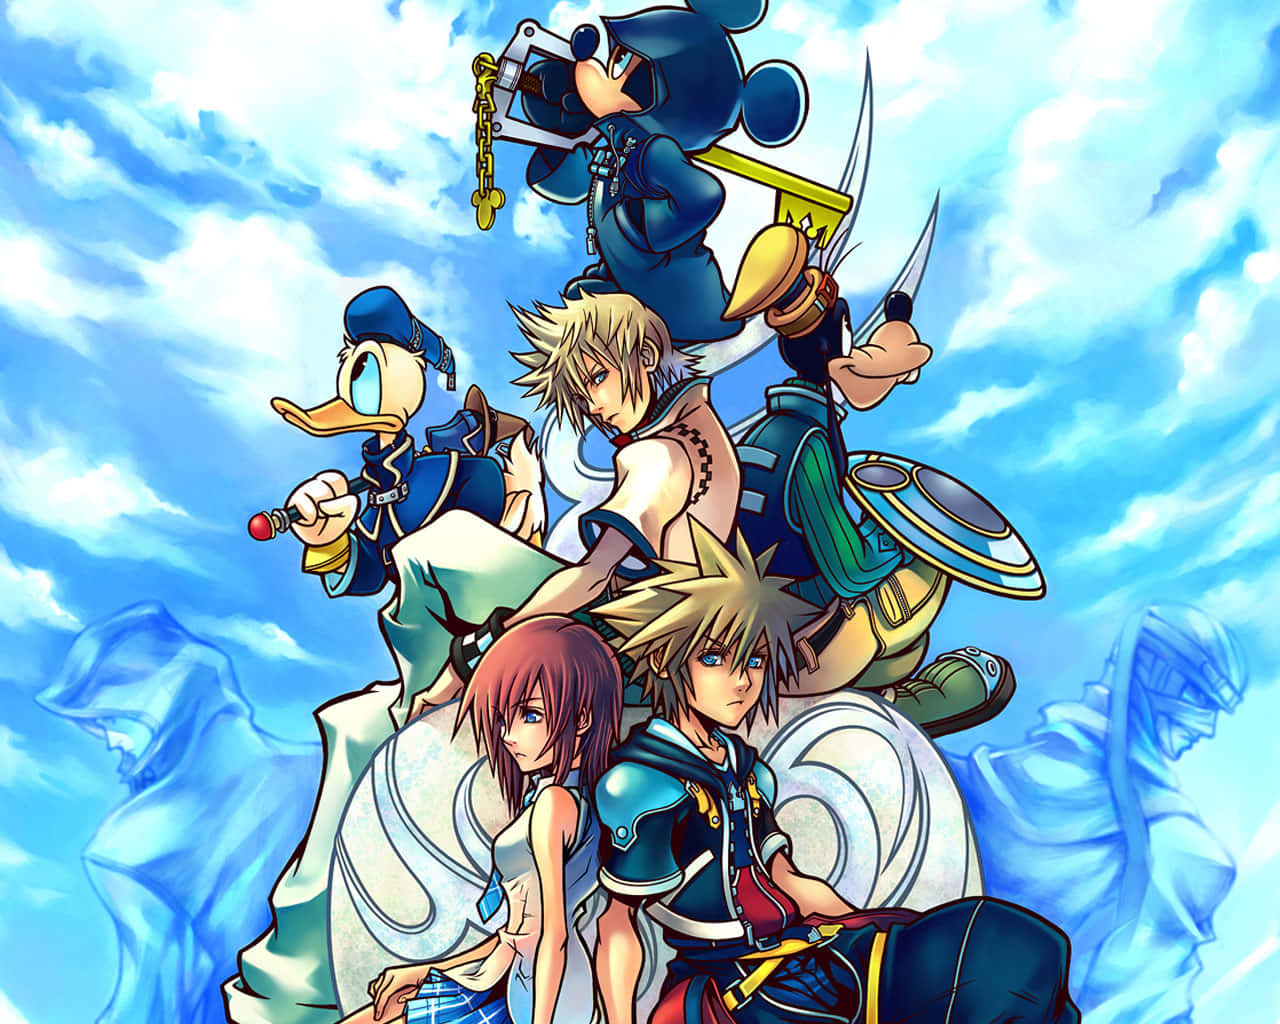 Personajesde Kingdom Hearts En Una Escena Épica De Batalla